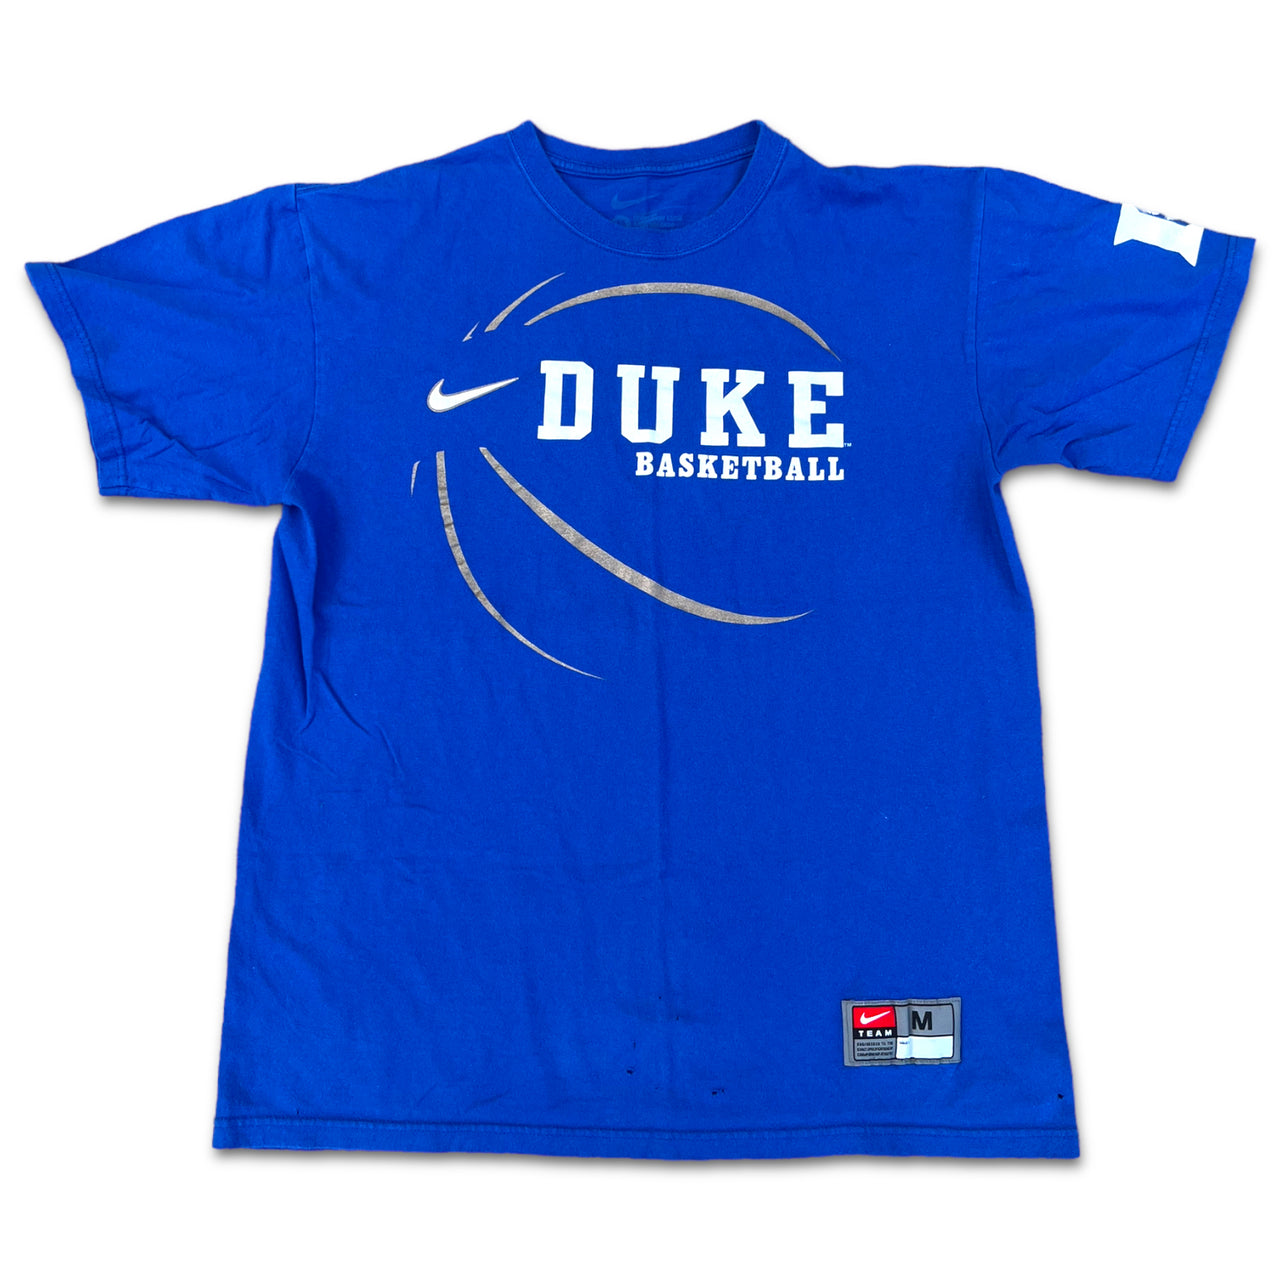 Duke Blue Devils Nike Basketball Tee M/L